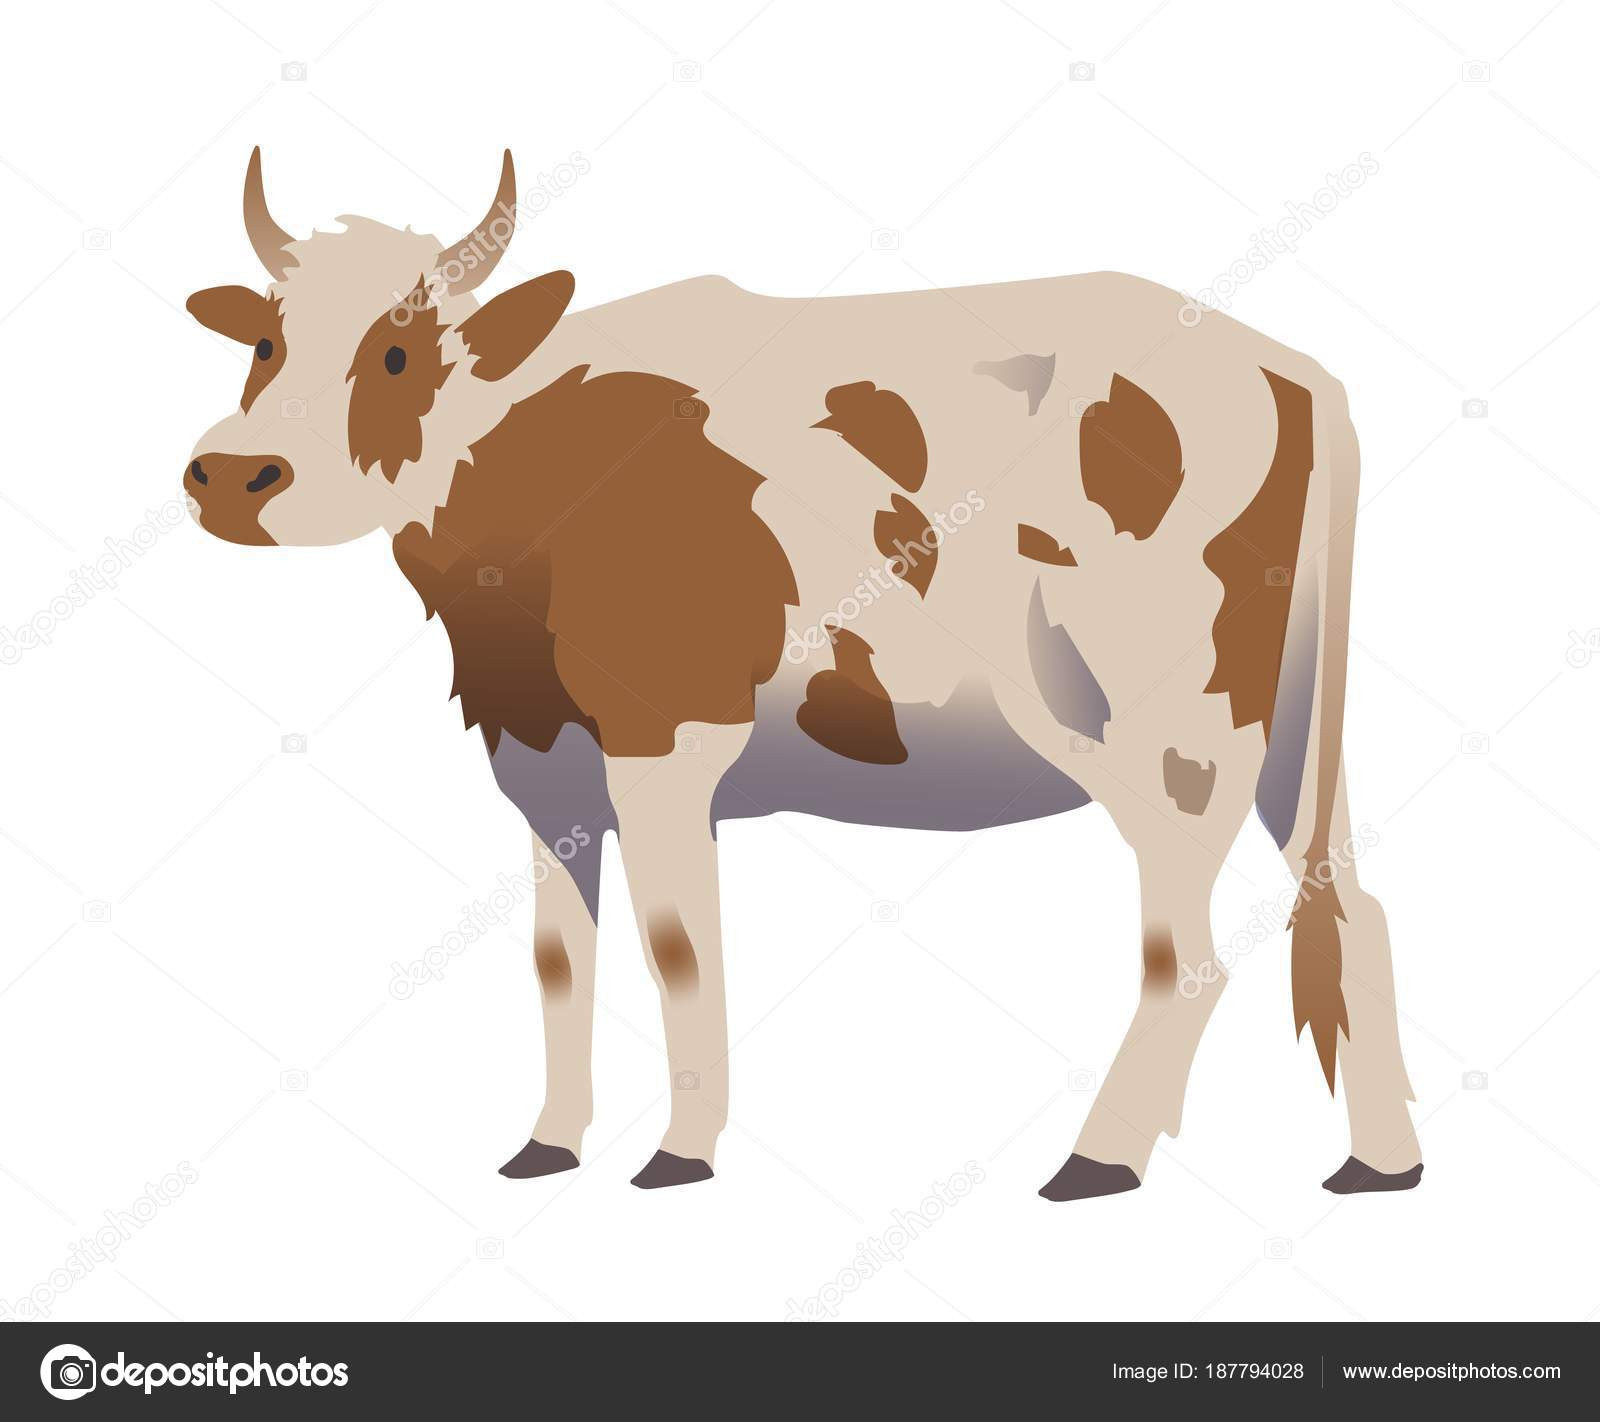 depositphotos stock illustration vector cow illustration isolated on